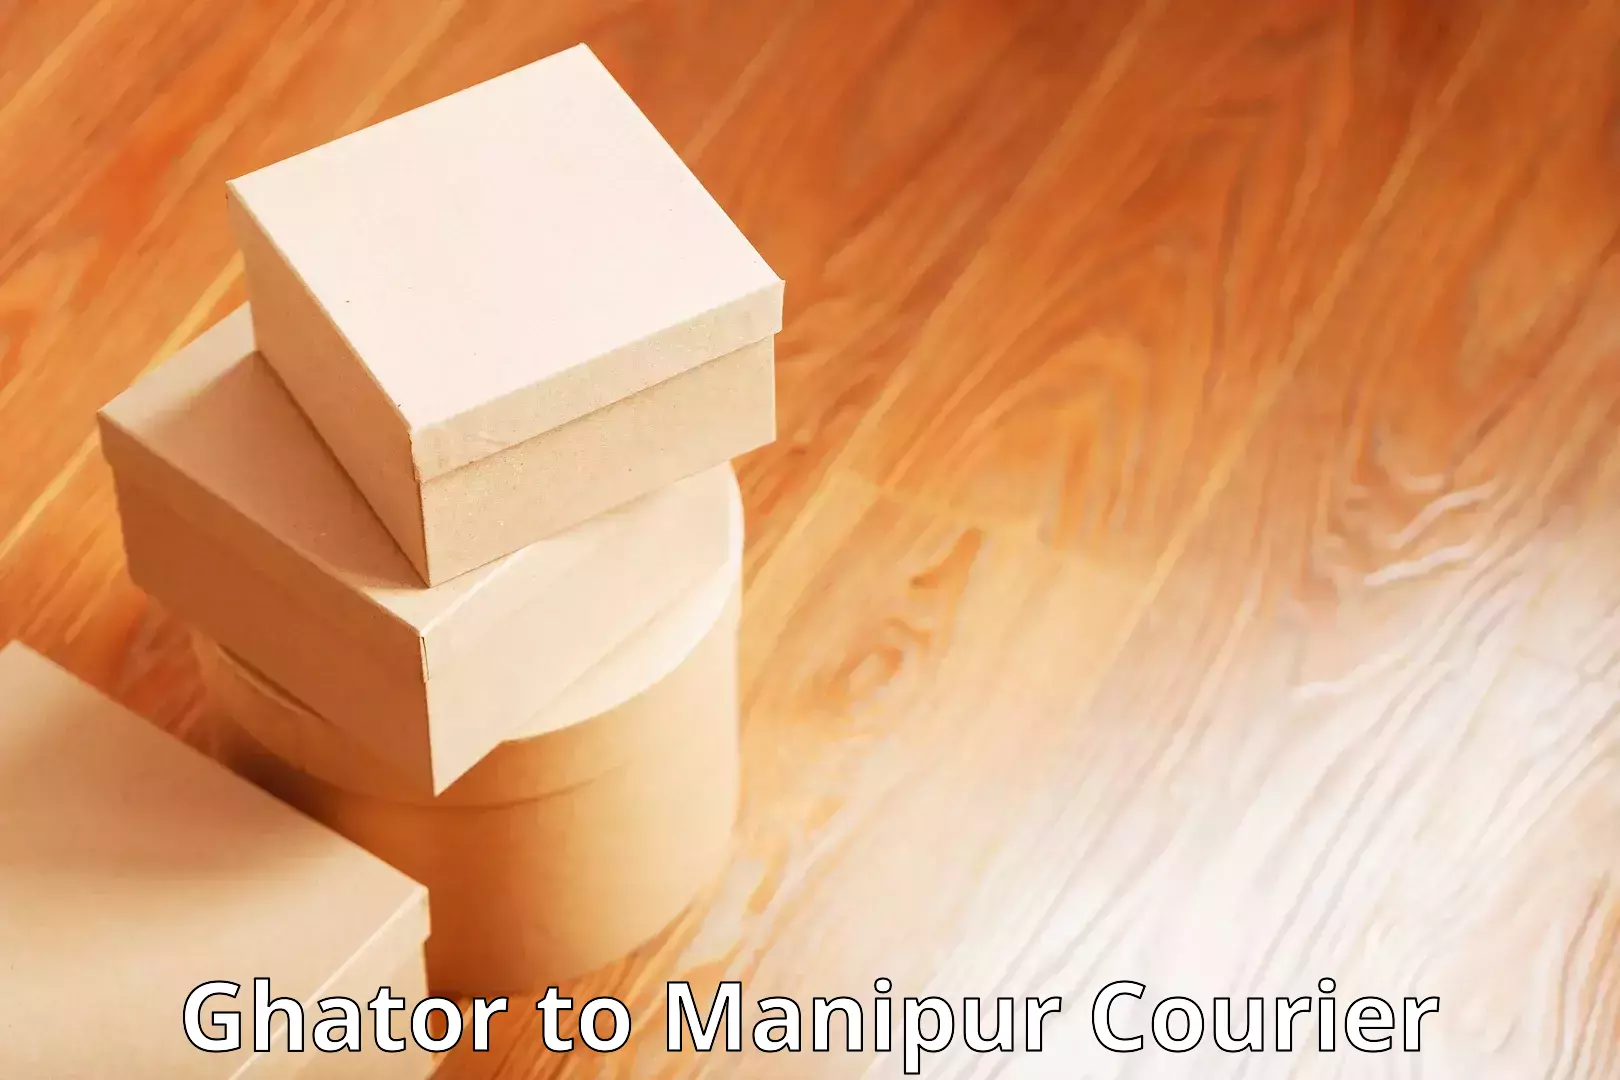 Digital courier platforms Ghator to Manipur